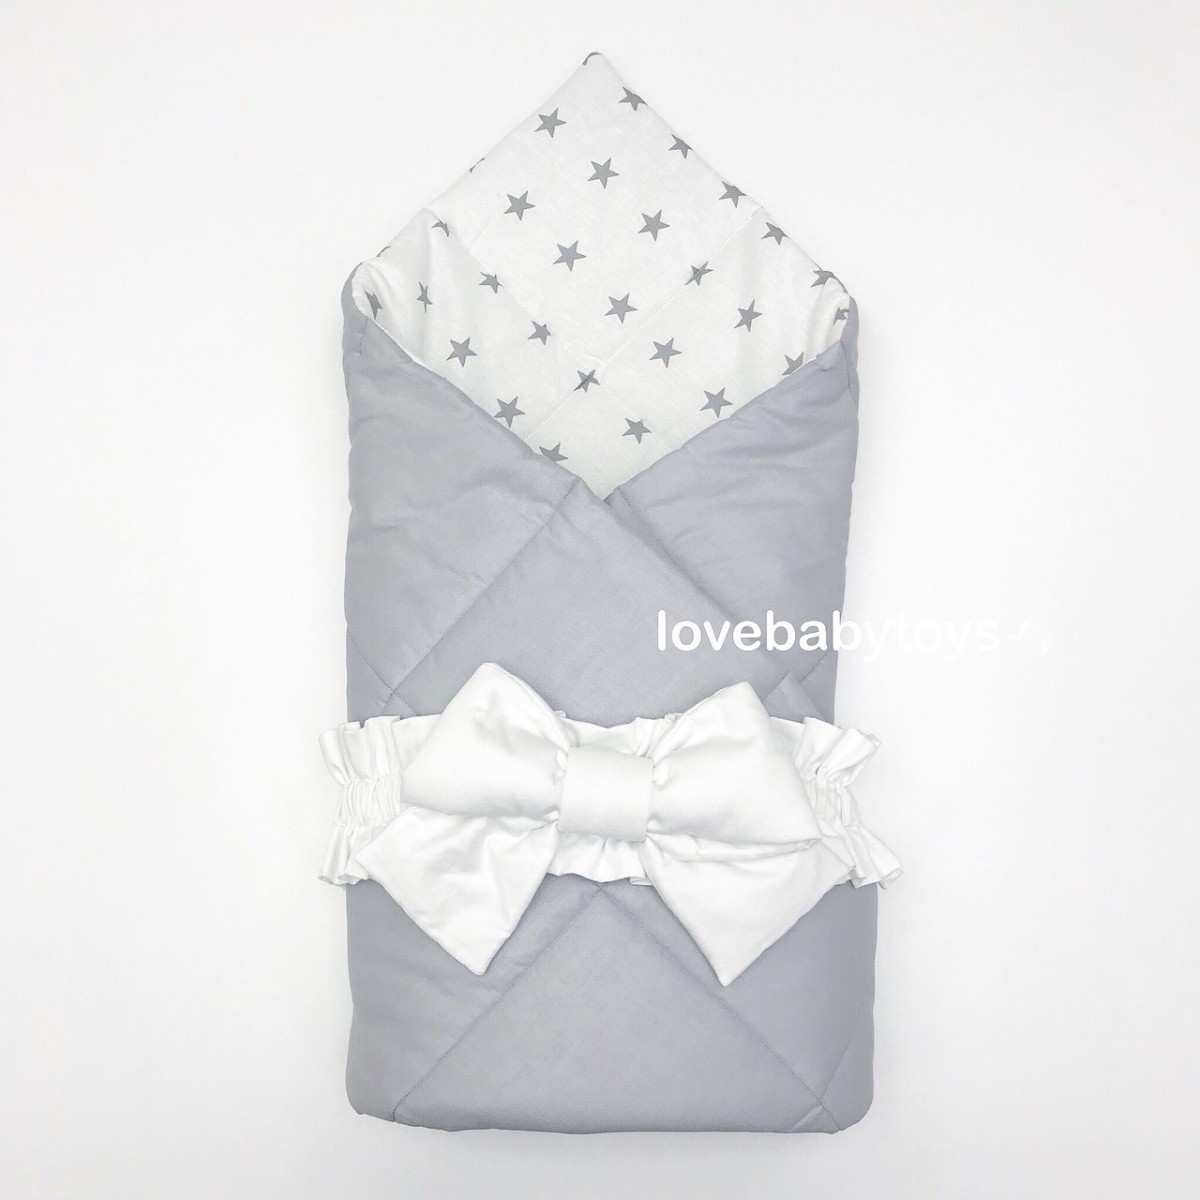  LoveBabyToys конверт-одеяло на выписку